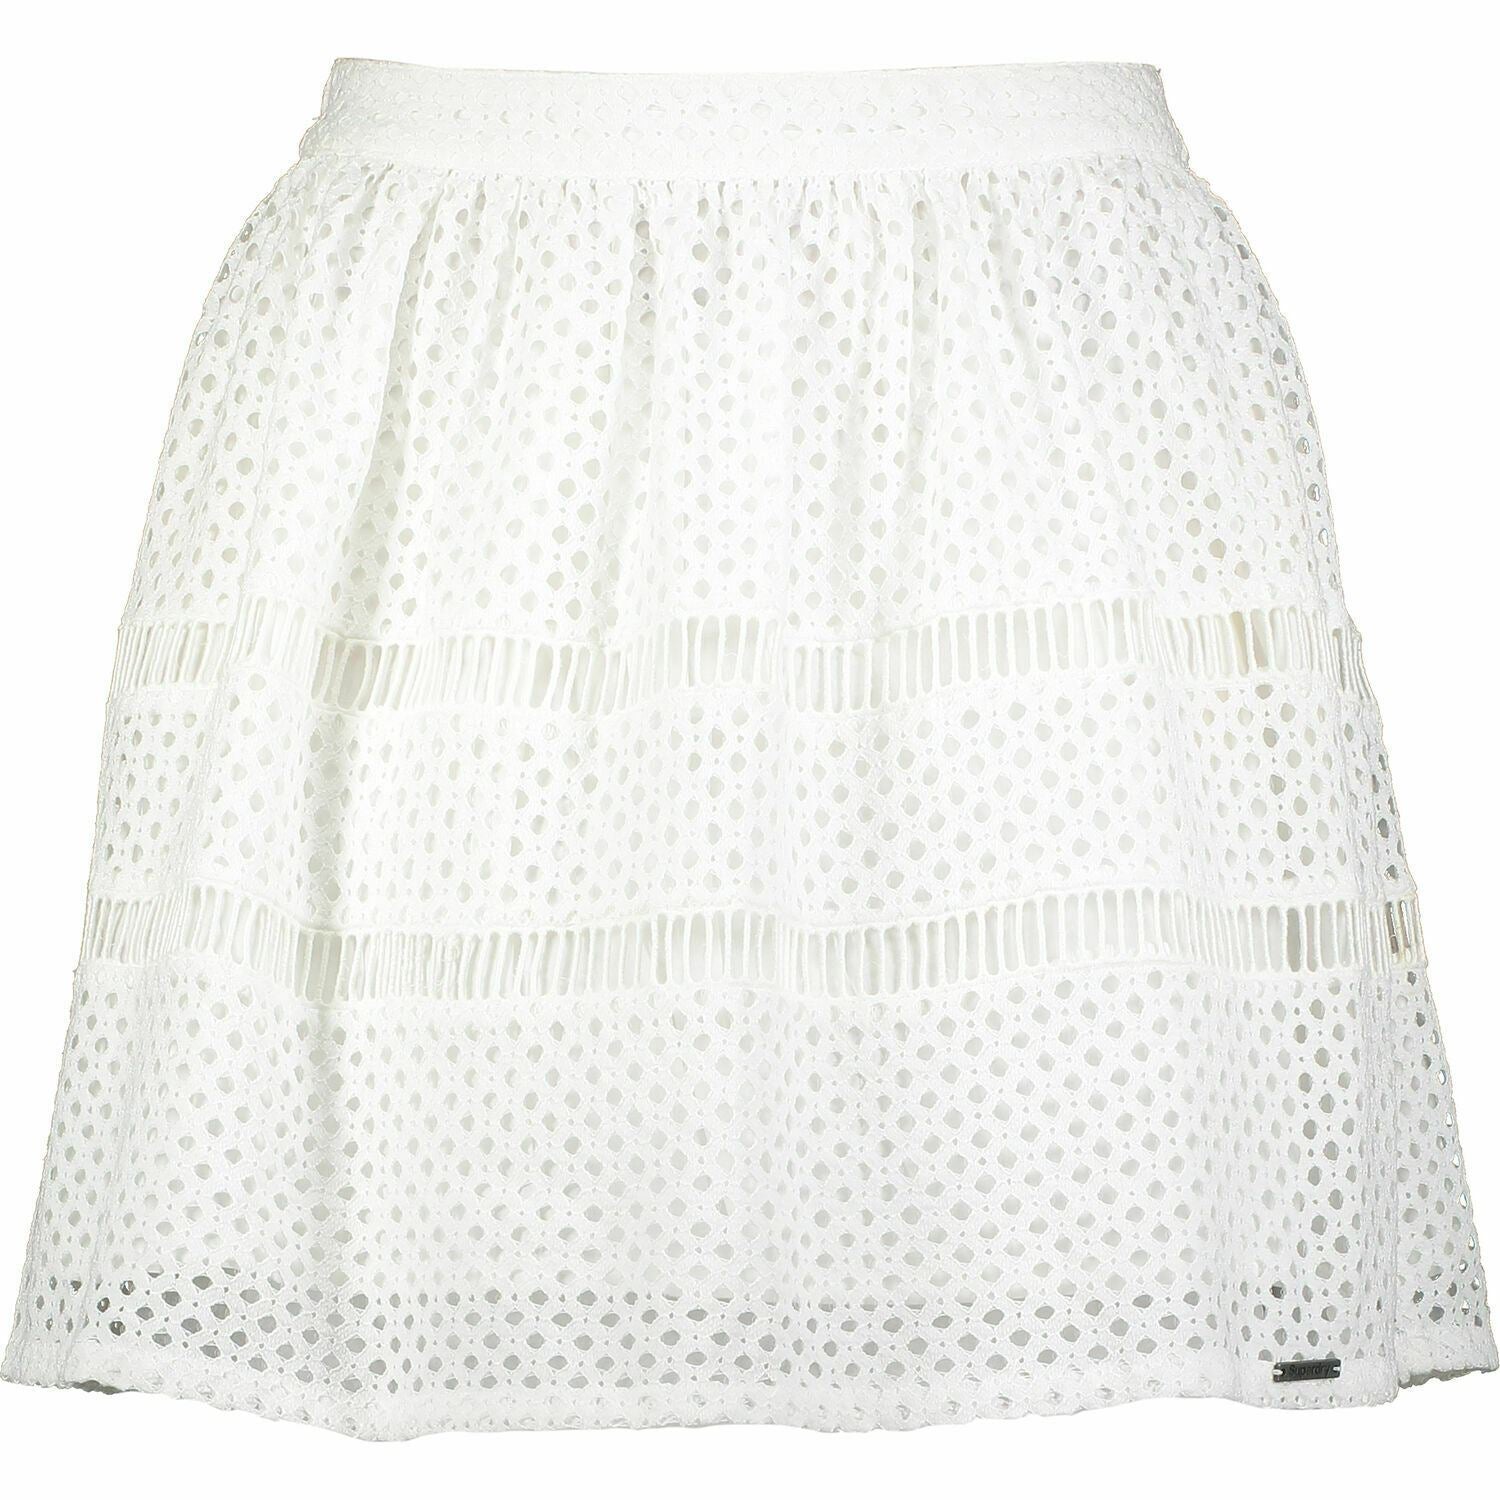 SUPERDRY Women's Geo Lace Mix Skater Skirt, Optic White, size S / UK 10